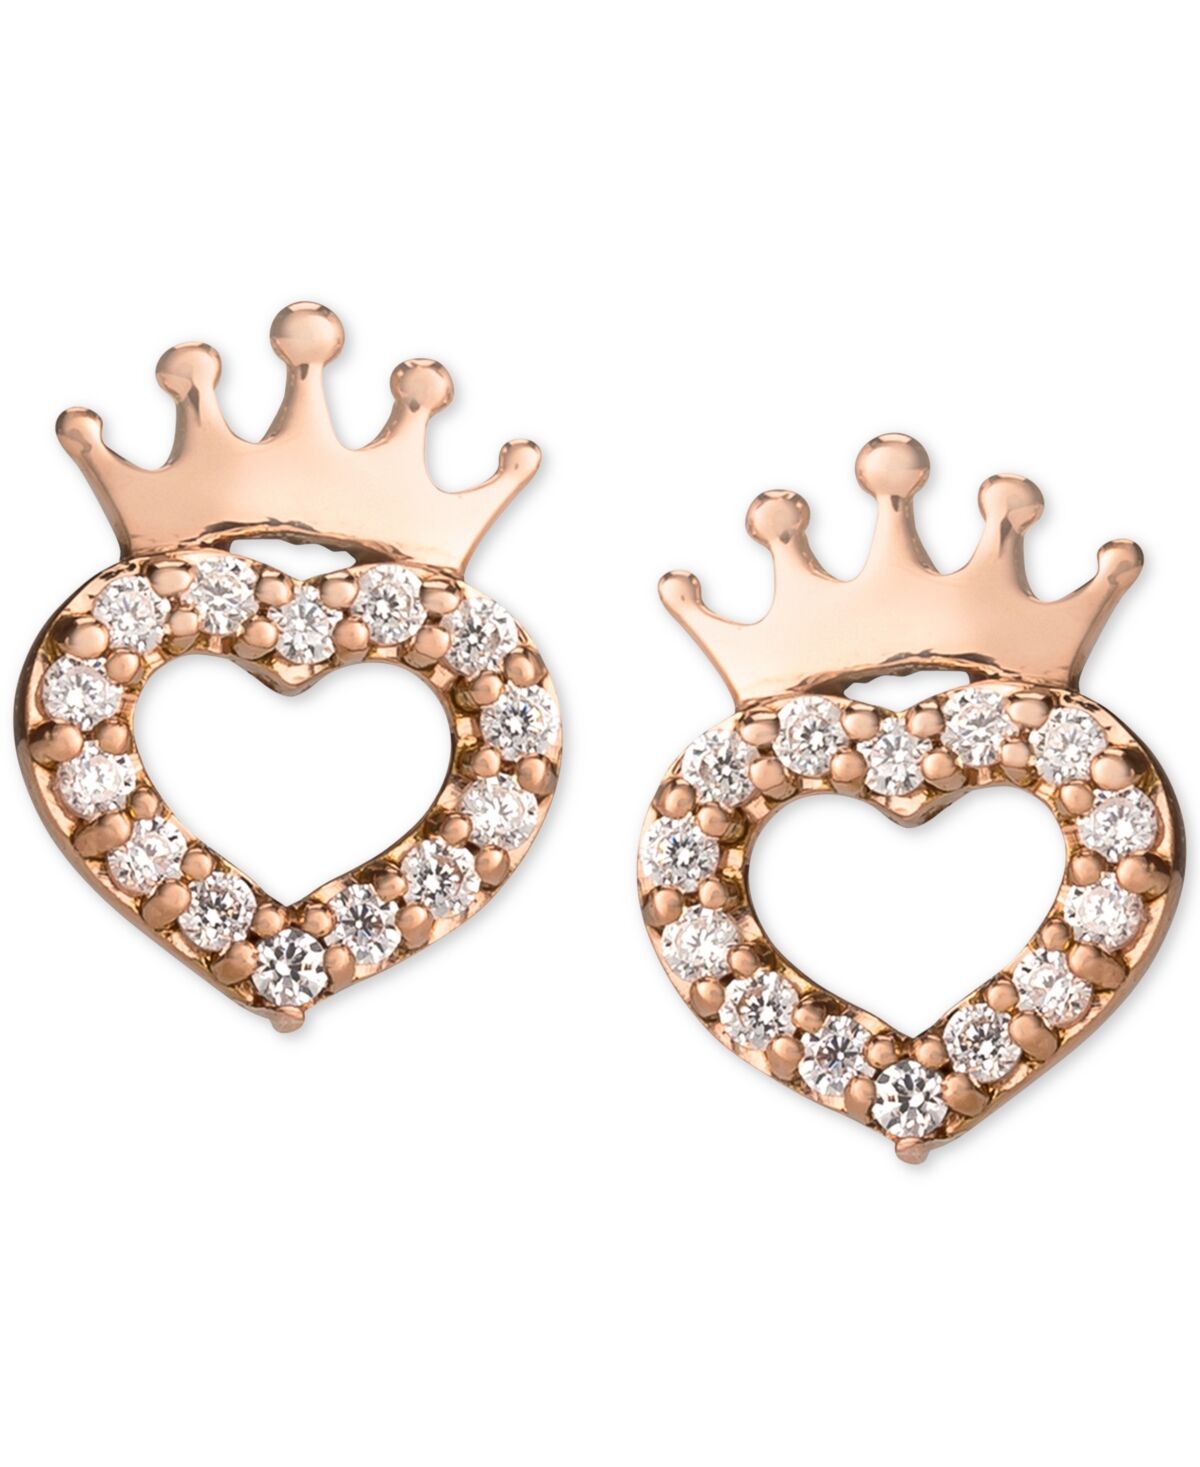 Disney Children's Cubic Zirconia Heart & Crown Stud Earrings in 14k Rose Gold - Rose Gold